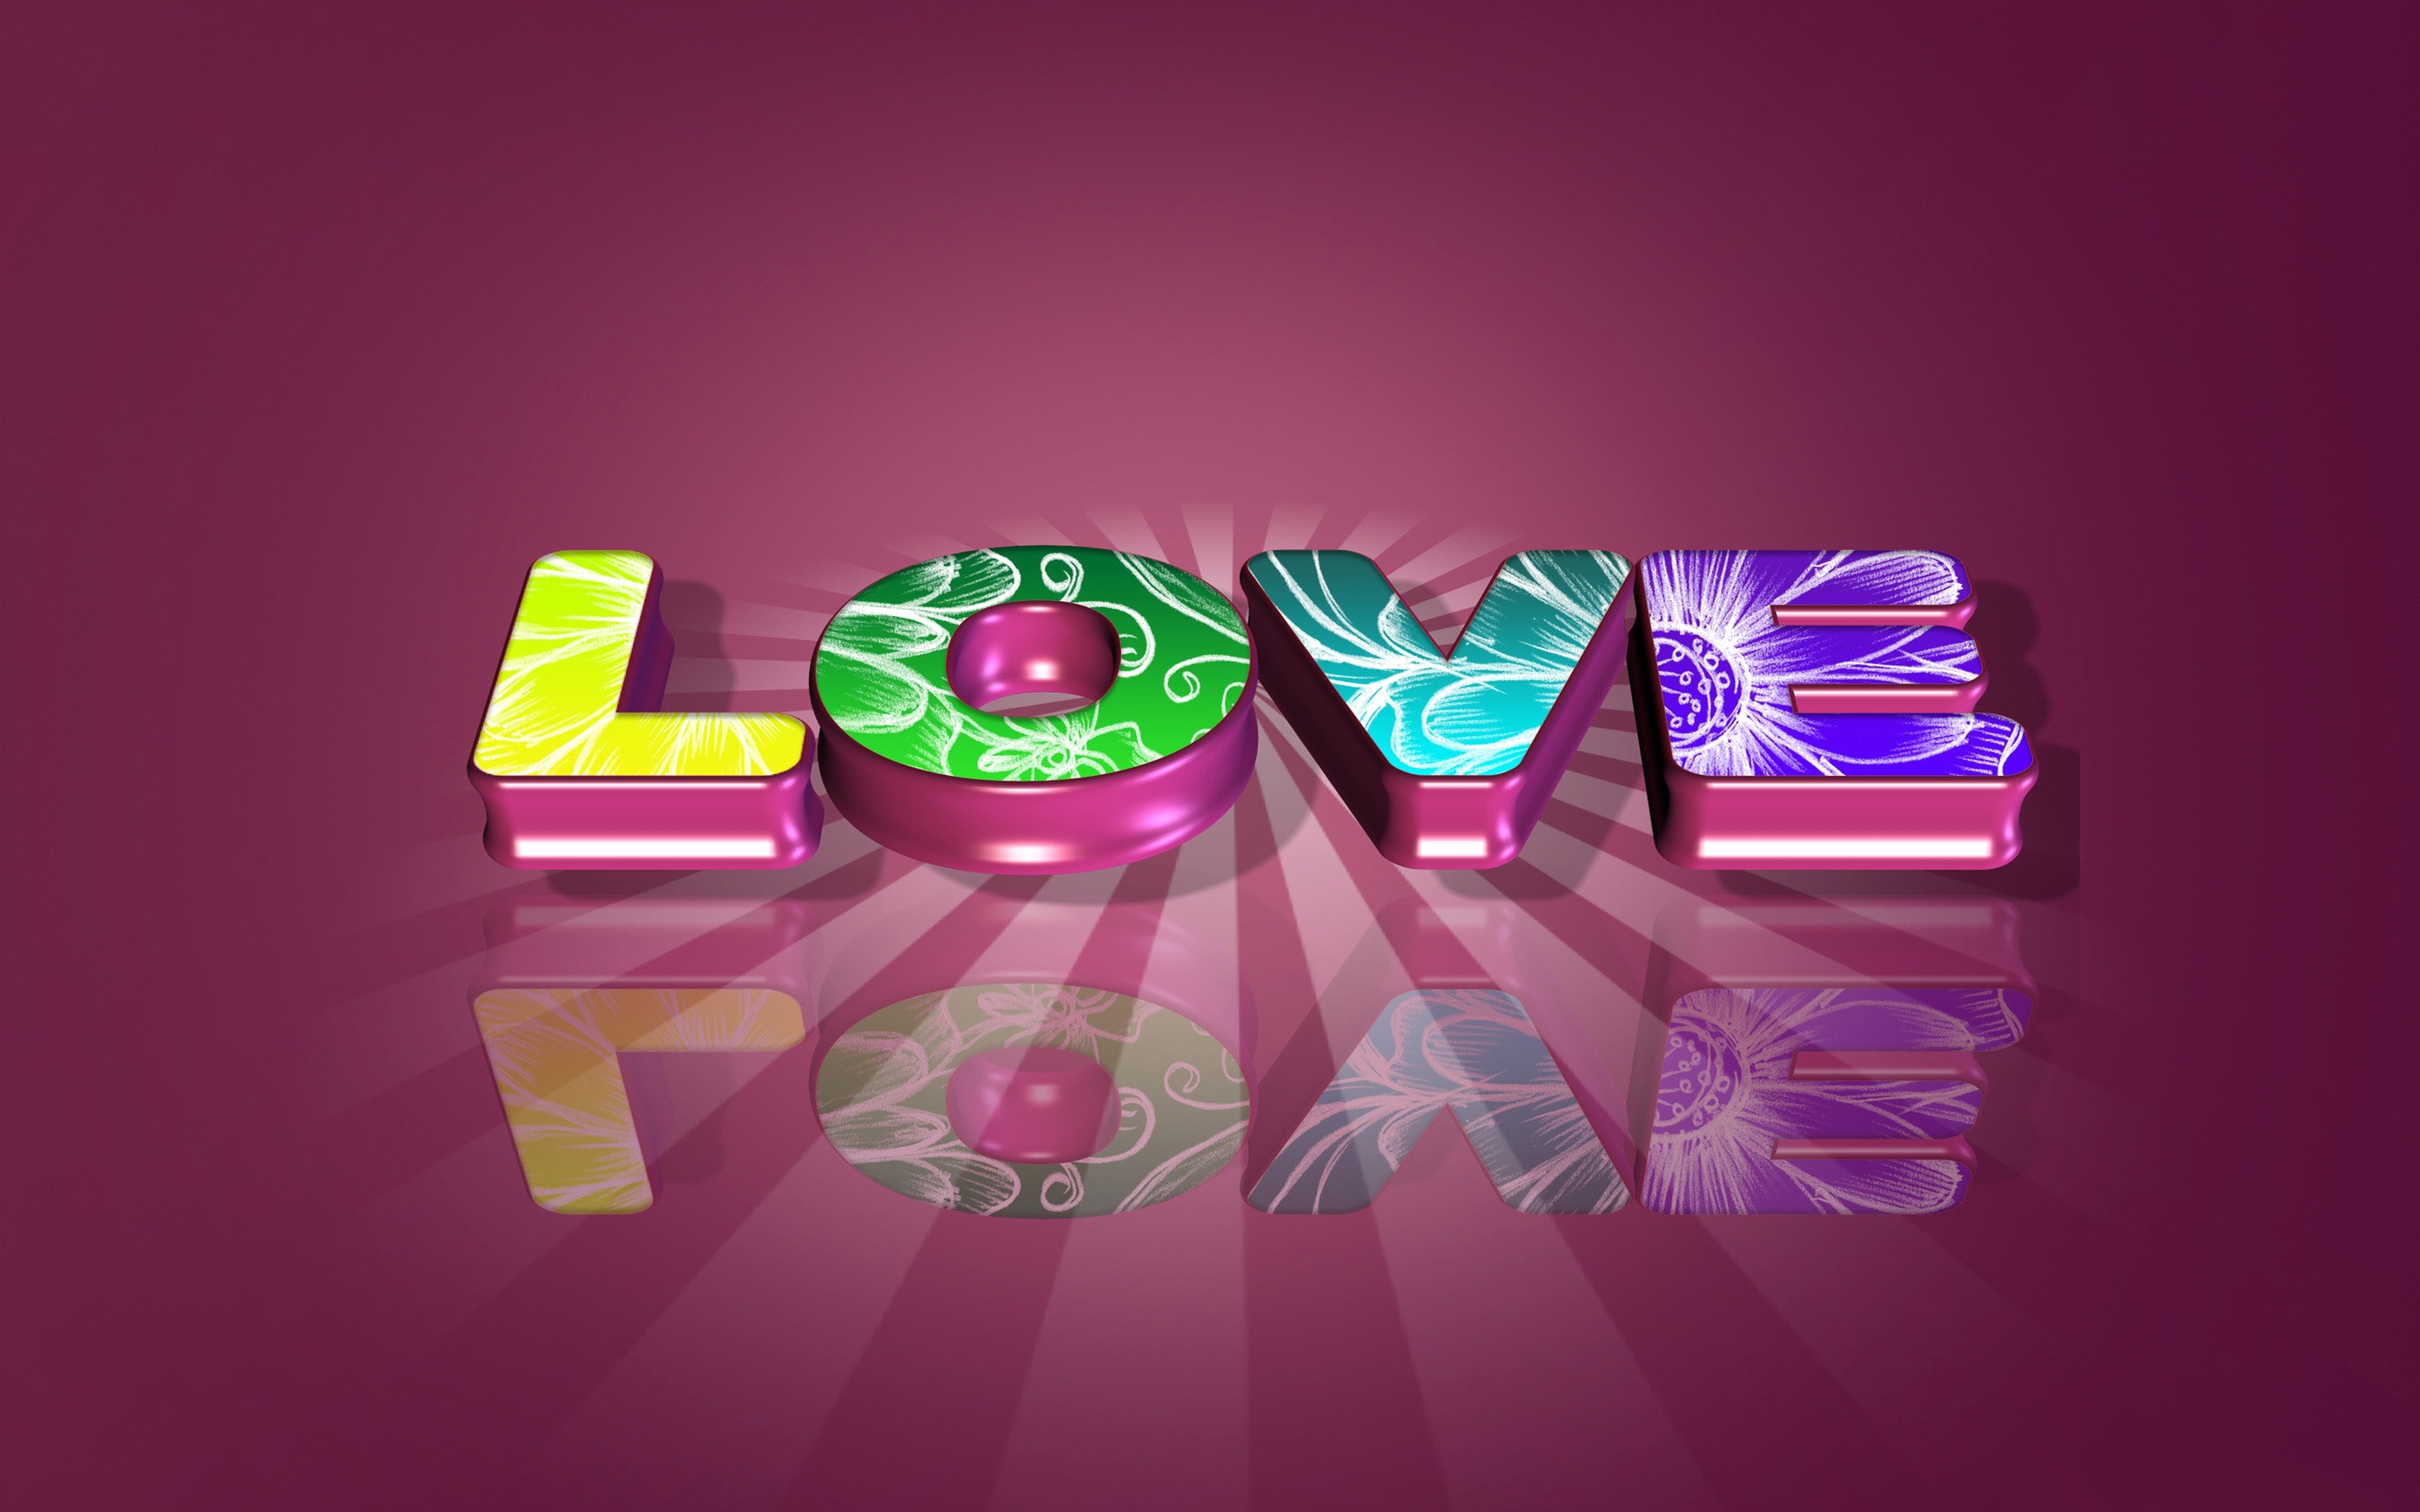 Wallpaper, illustration, love, heart, text, sign, pink, bright, brand, shape, computer wallpaper, font, product 2560x1600